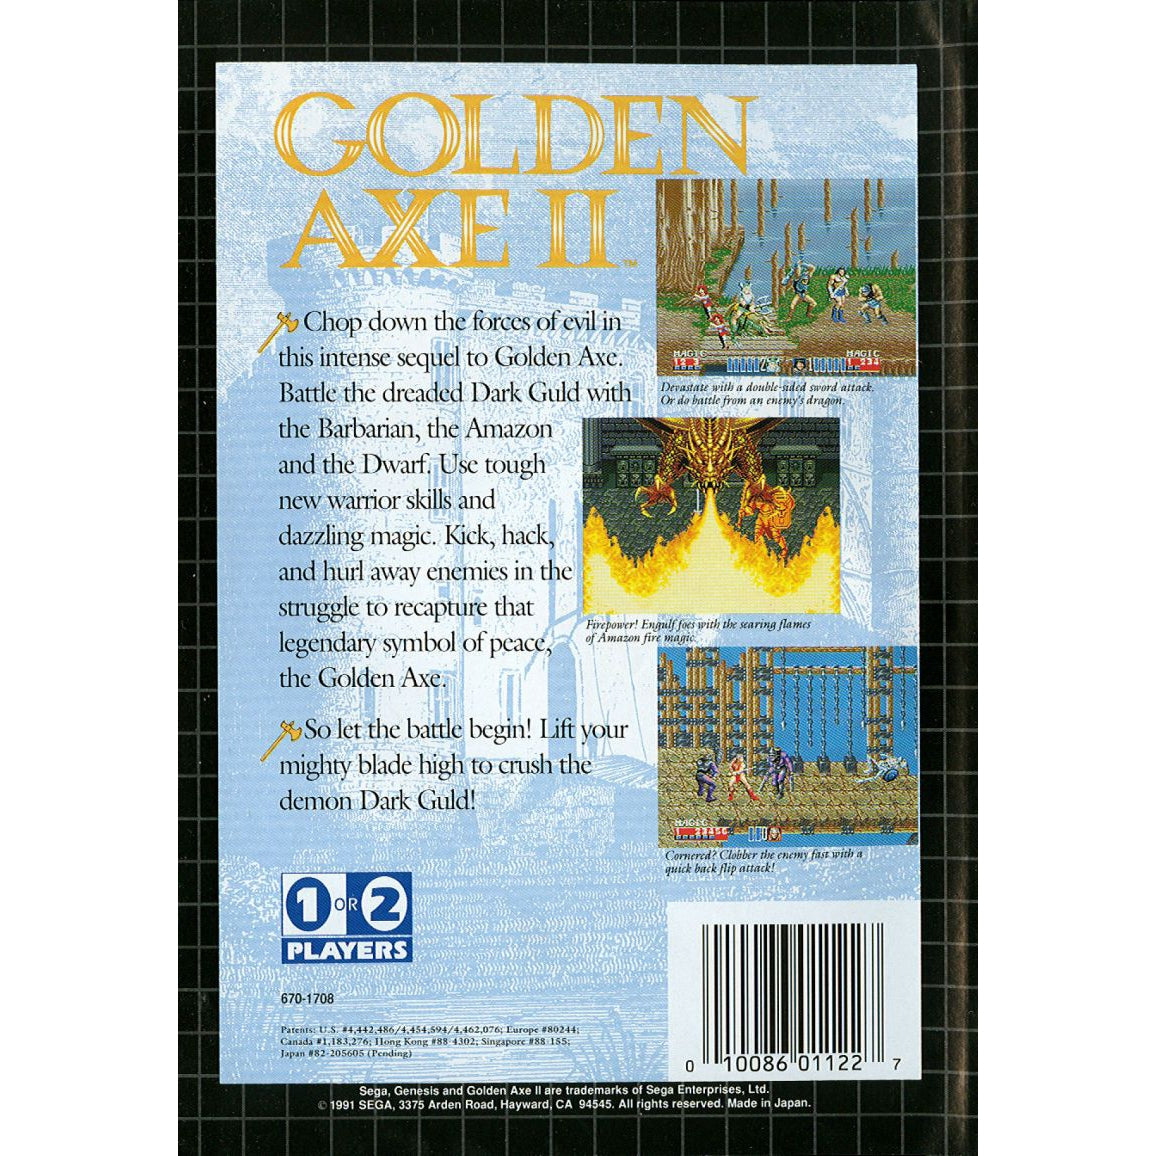 Golden Axe II - Sega Genesis Game Complete - YourGamingShop.com - Buy, Sell, Trade Video Games Online. 120 Day Warranty. Satisfaction Guaranteed.